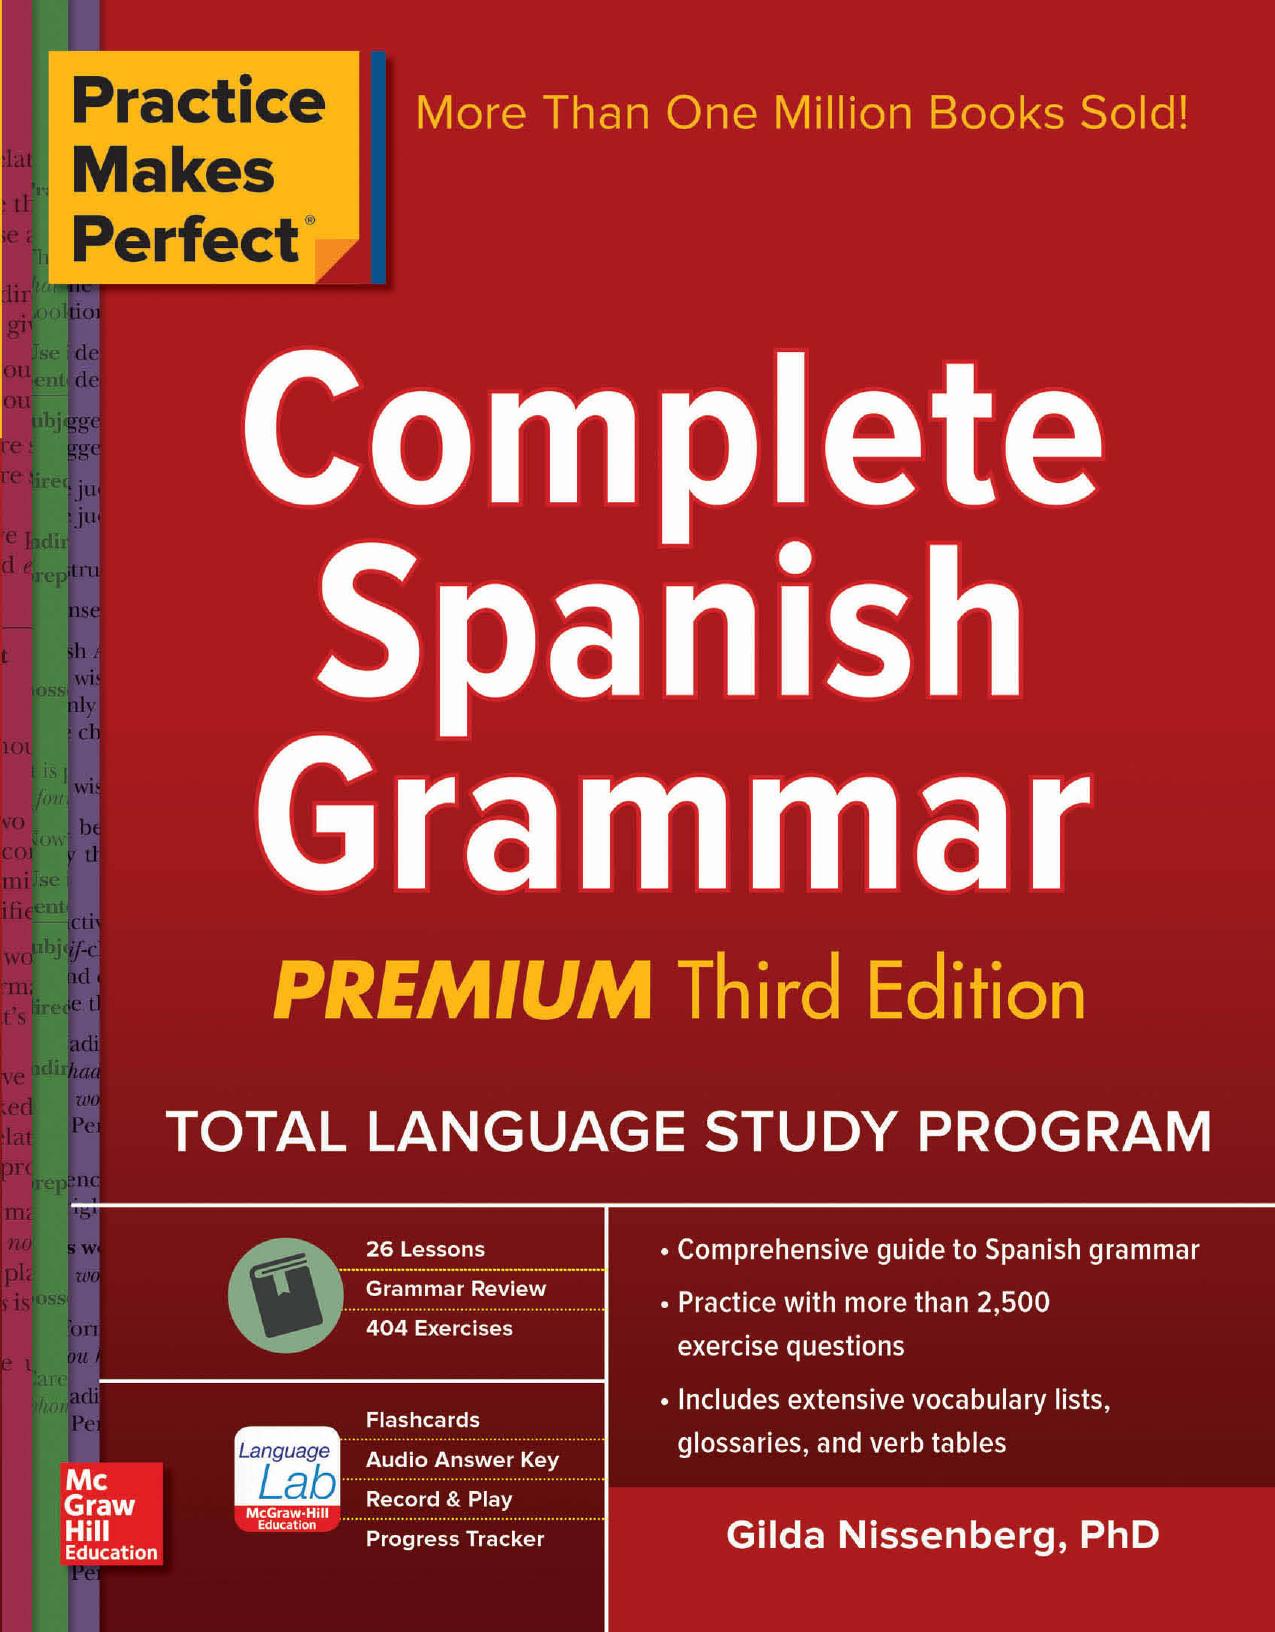 Practice Makes Perfect: Complete Spanish Grammar, Premium Third Edition by Gilda Nissenberg